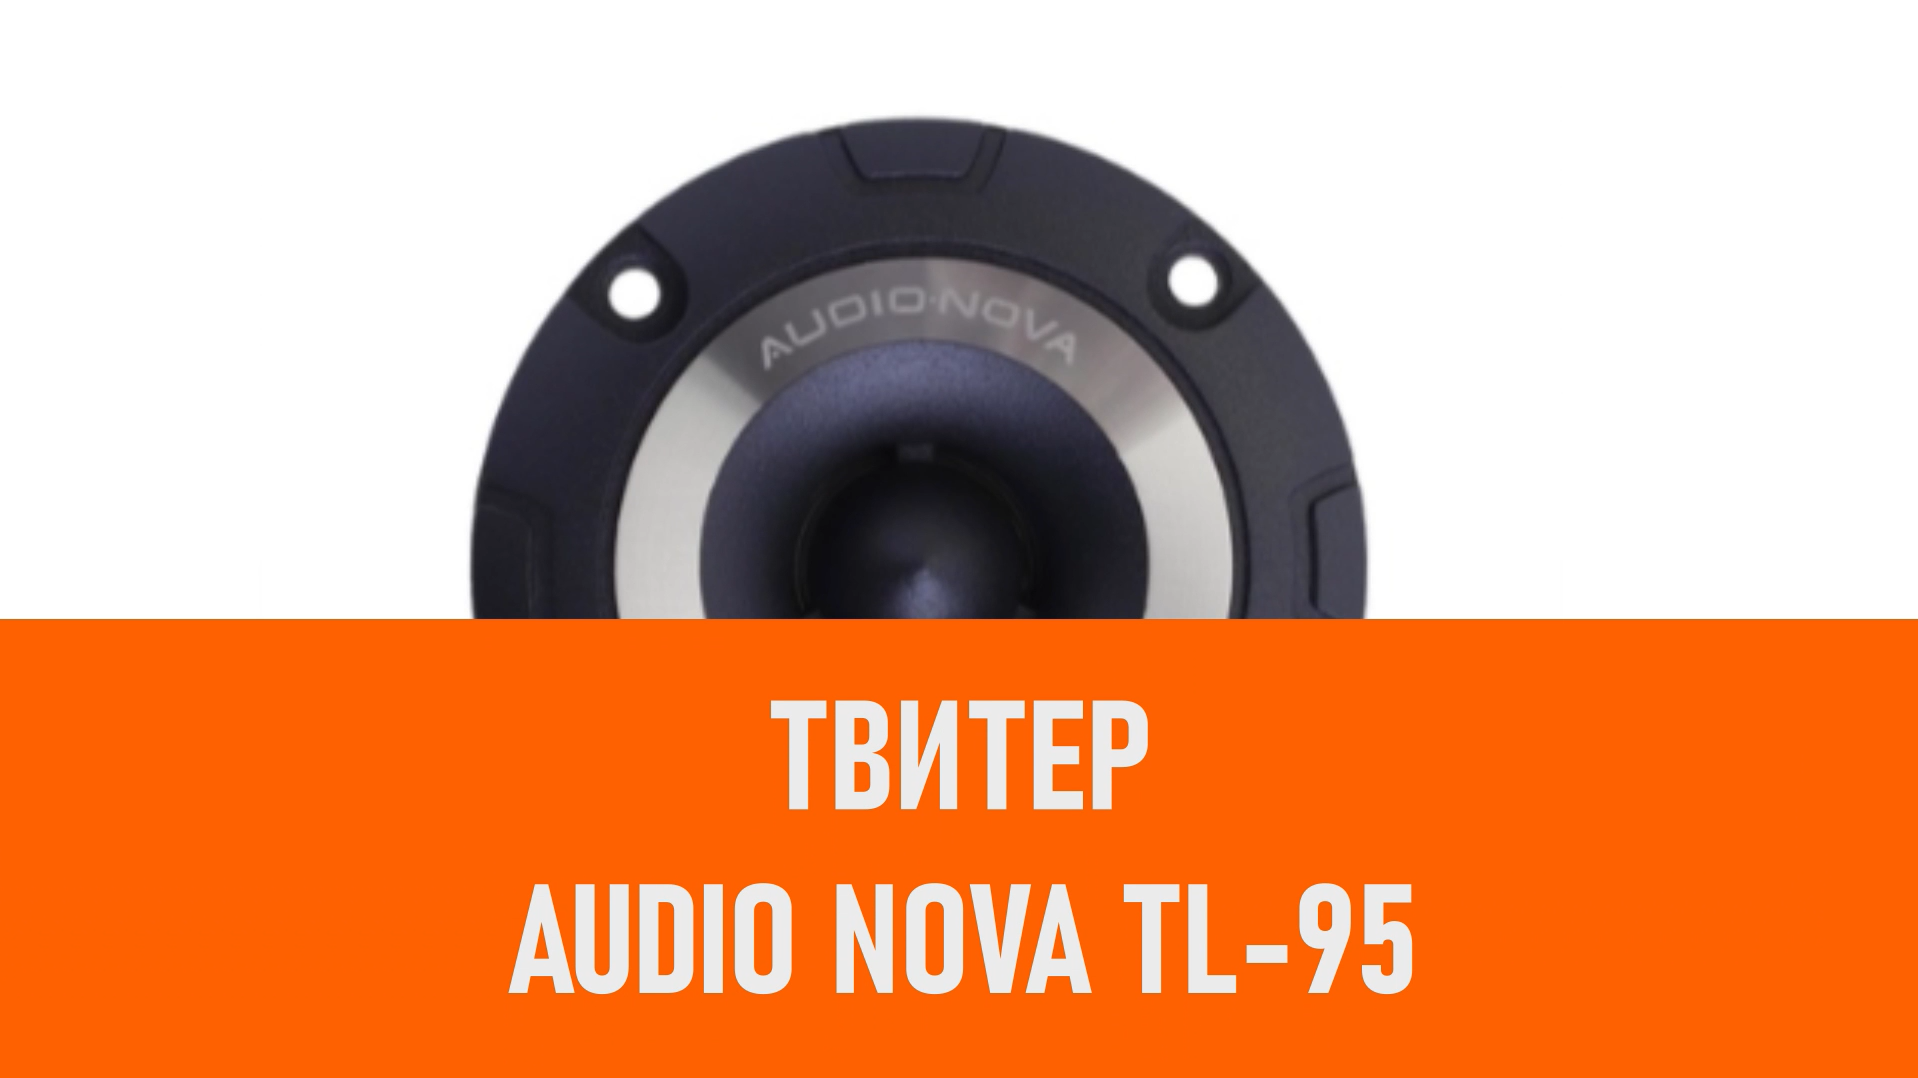 Распаковка твитера AUDIO NOVA TL-95